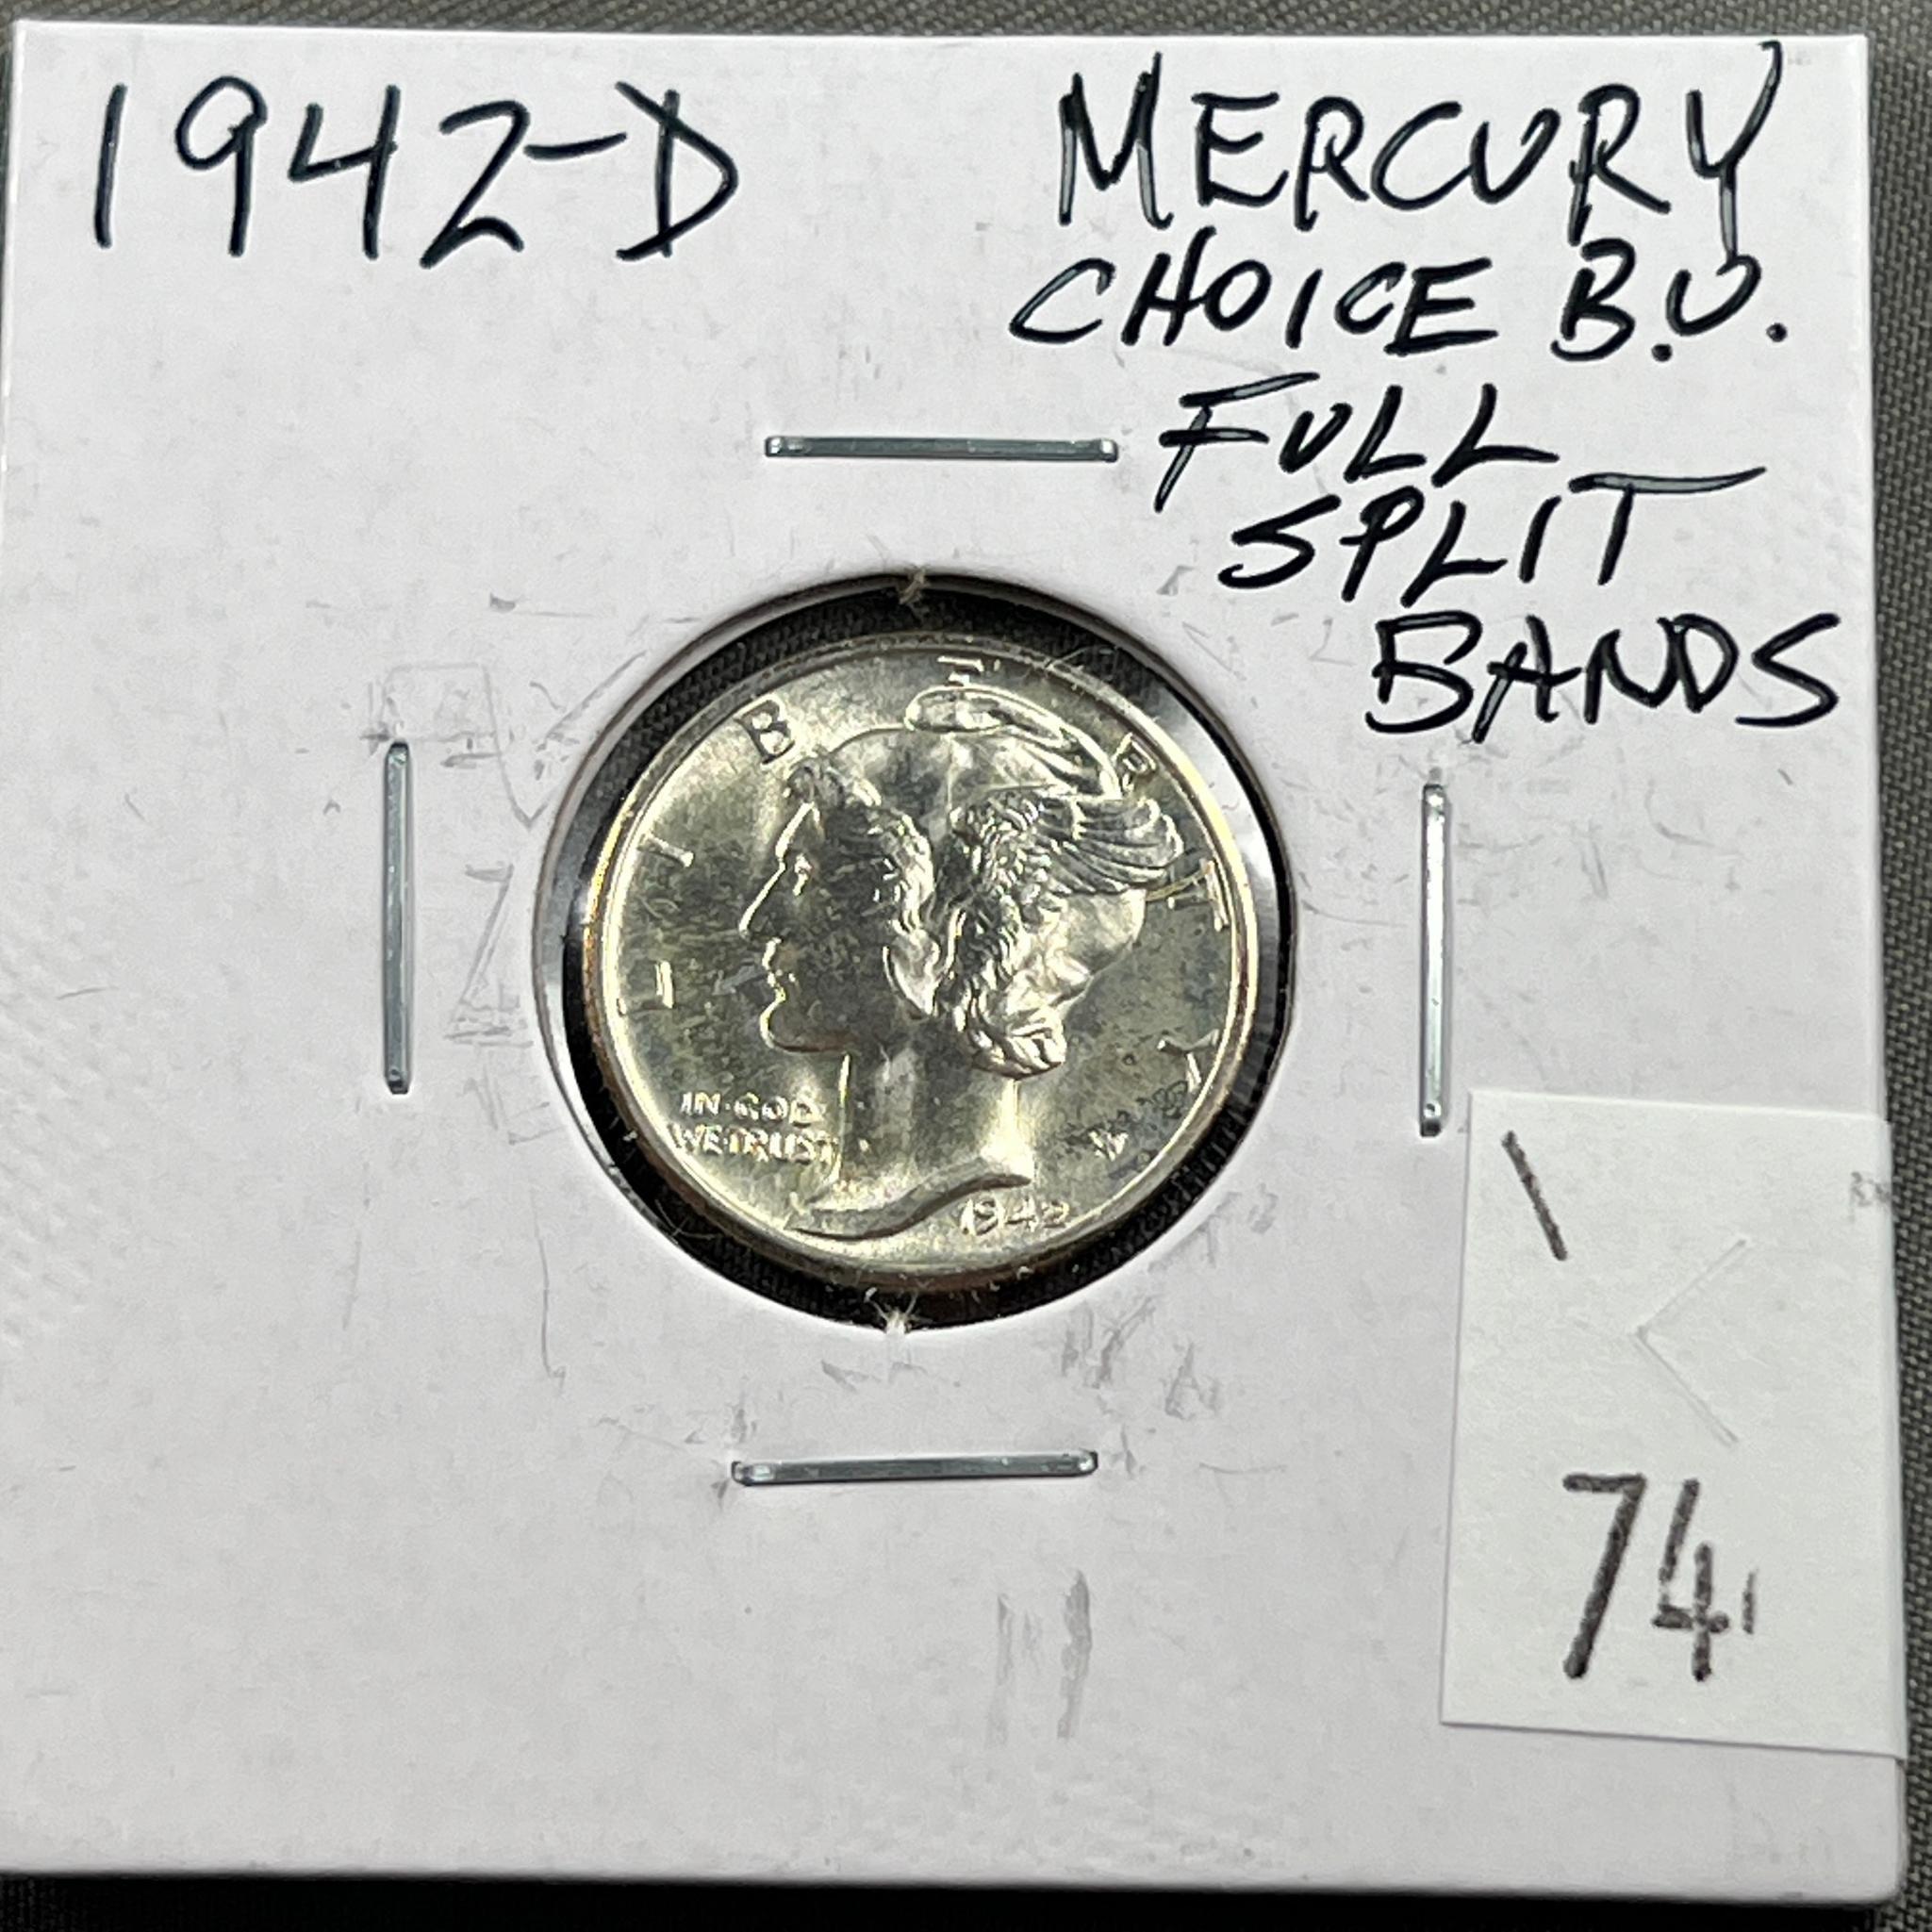 1942-D Mercury Dime, Choice BU, Full Split Bands